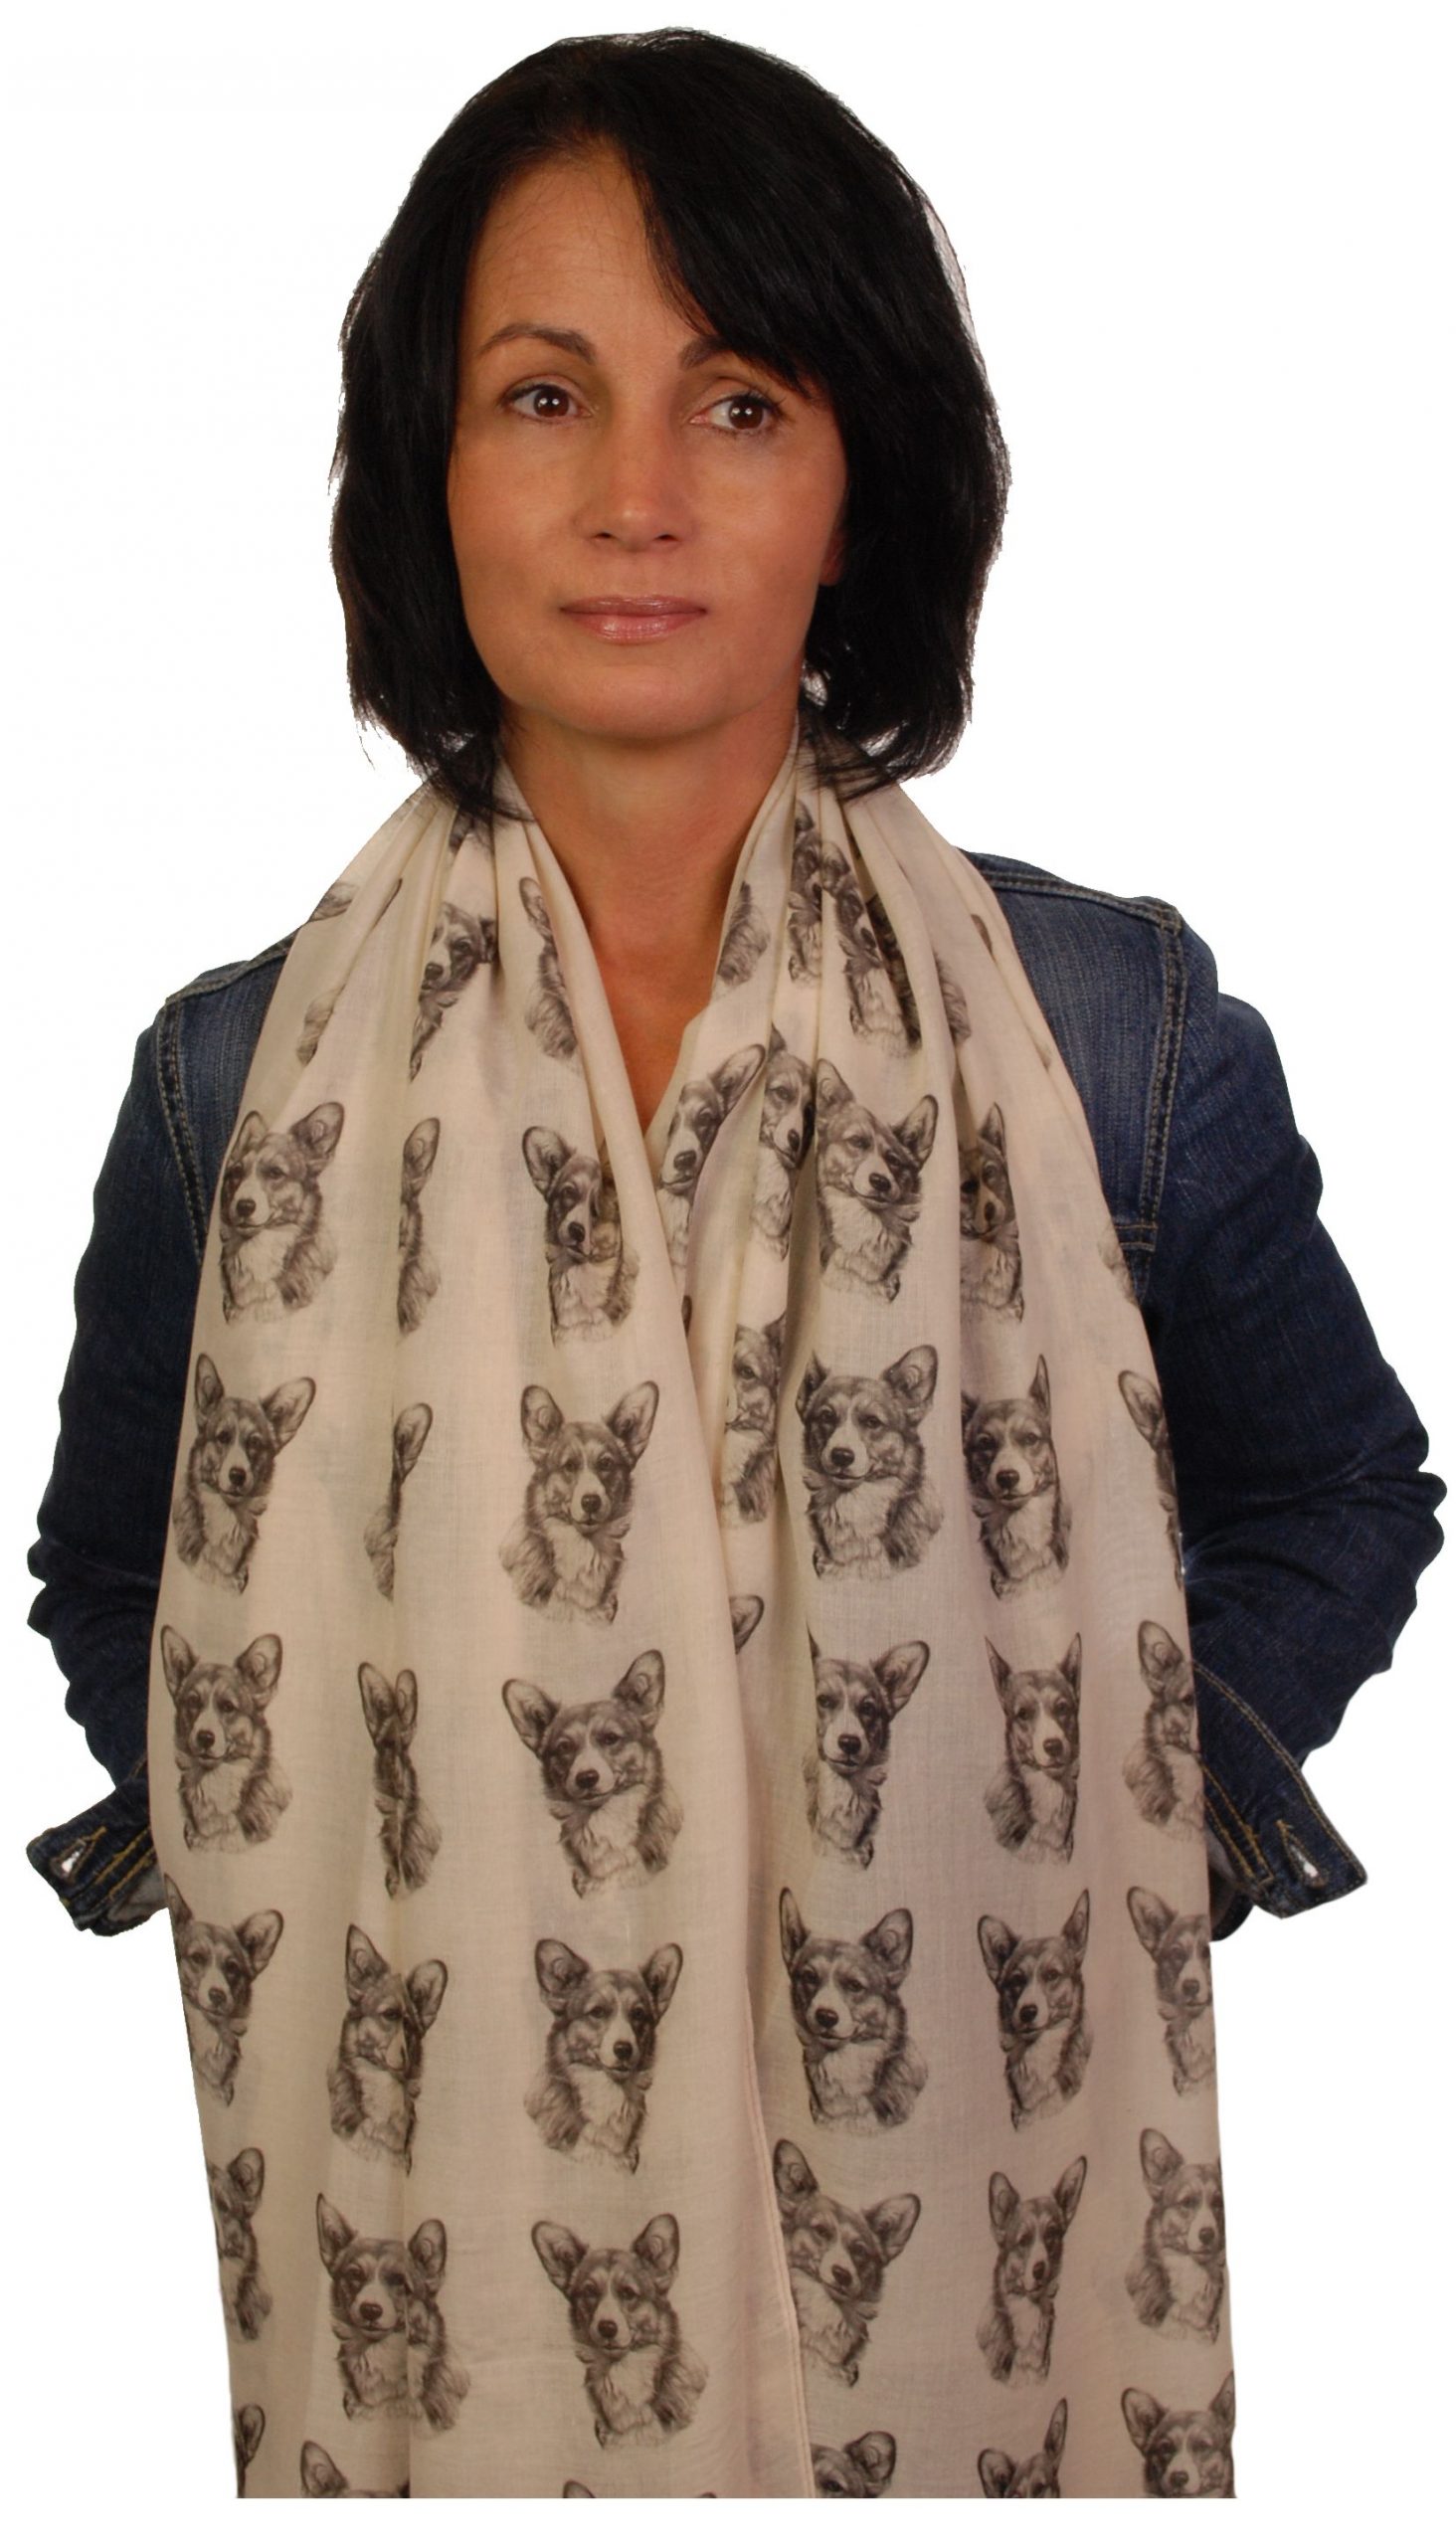 Mike Sibley Corgi licensed design ladies fashion scarf